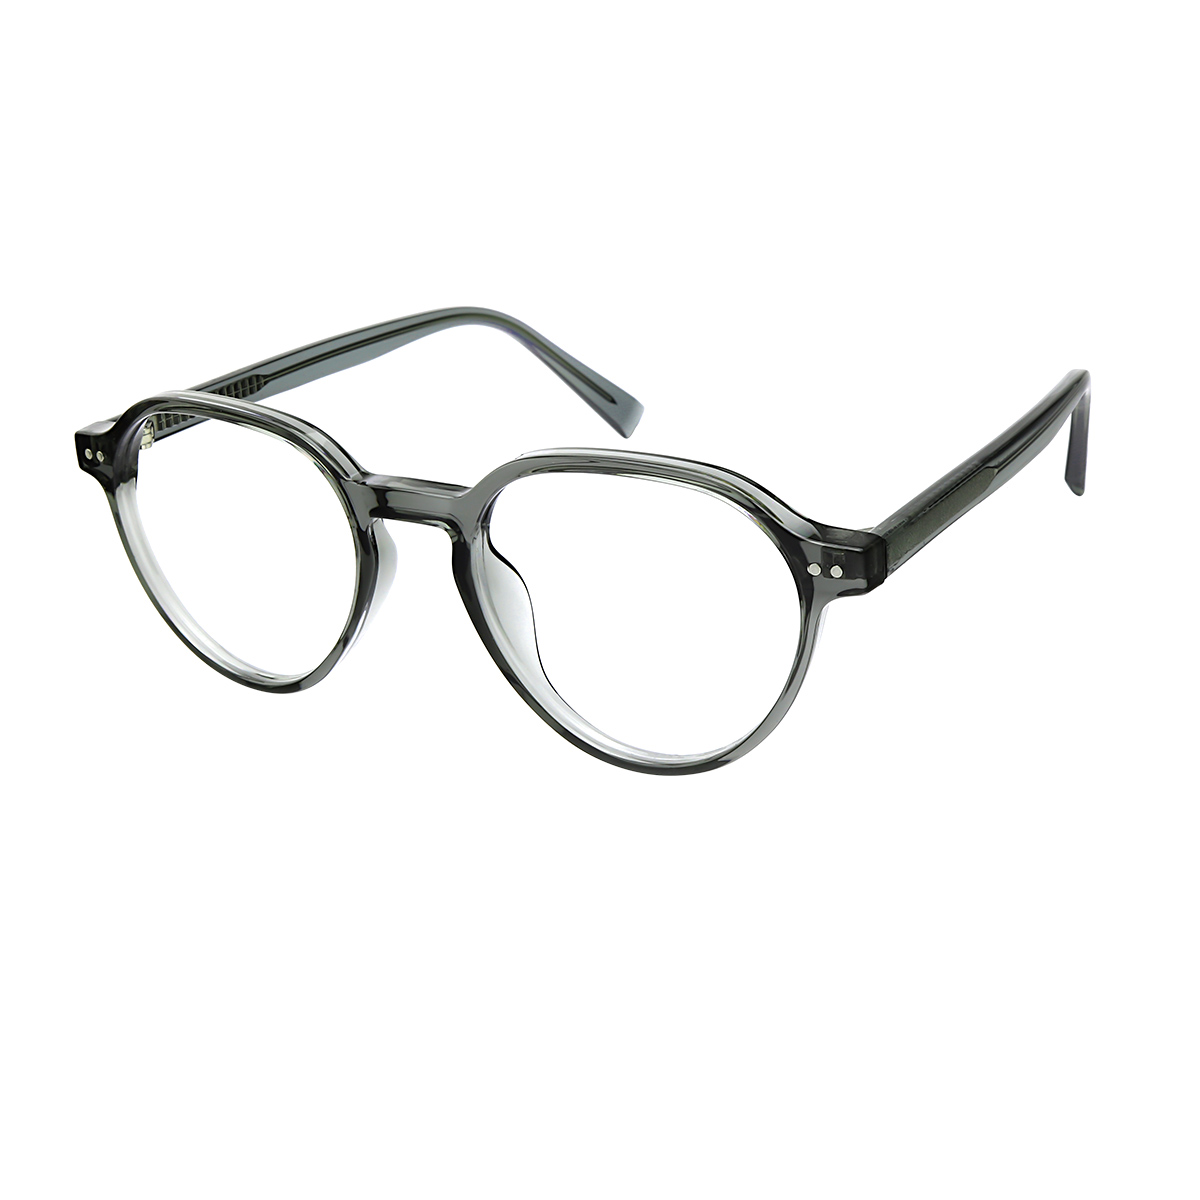 Matthew - Round Grey/Transparent Reading Glasses for Men & Women